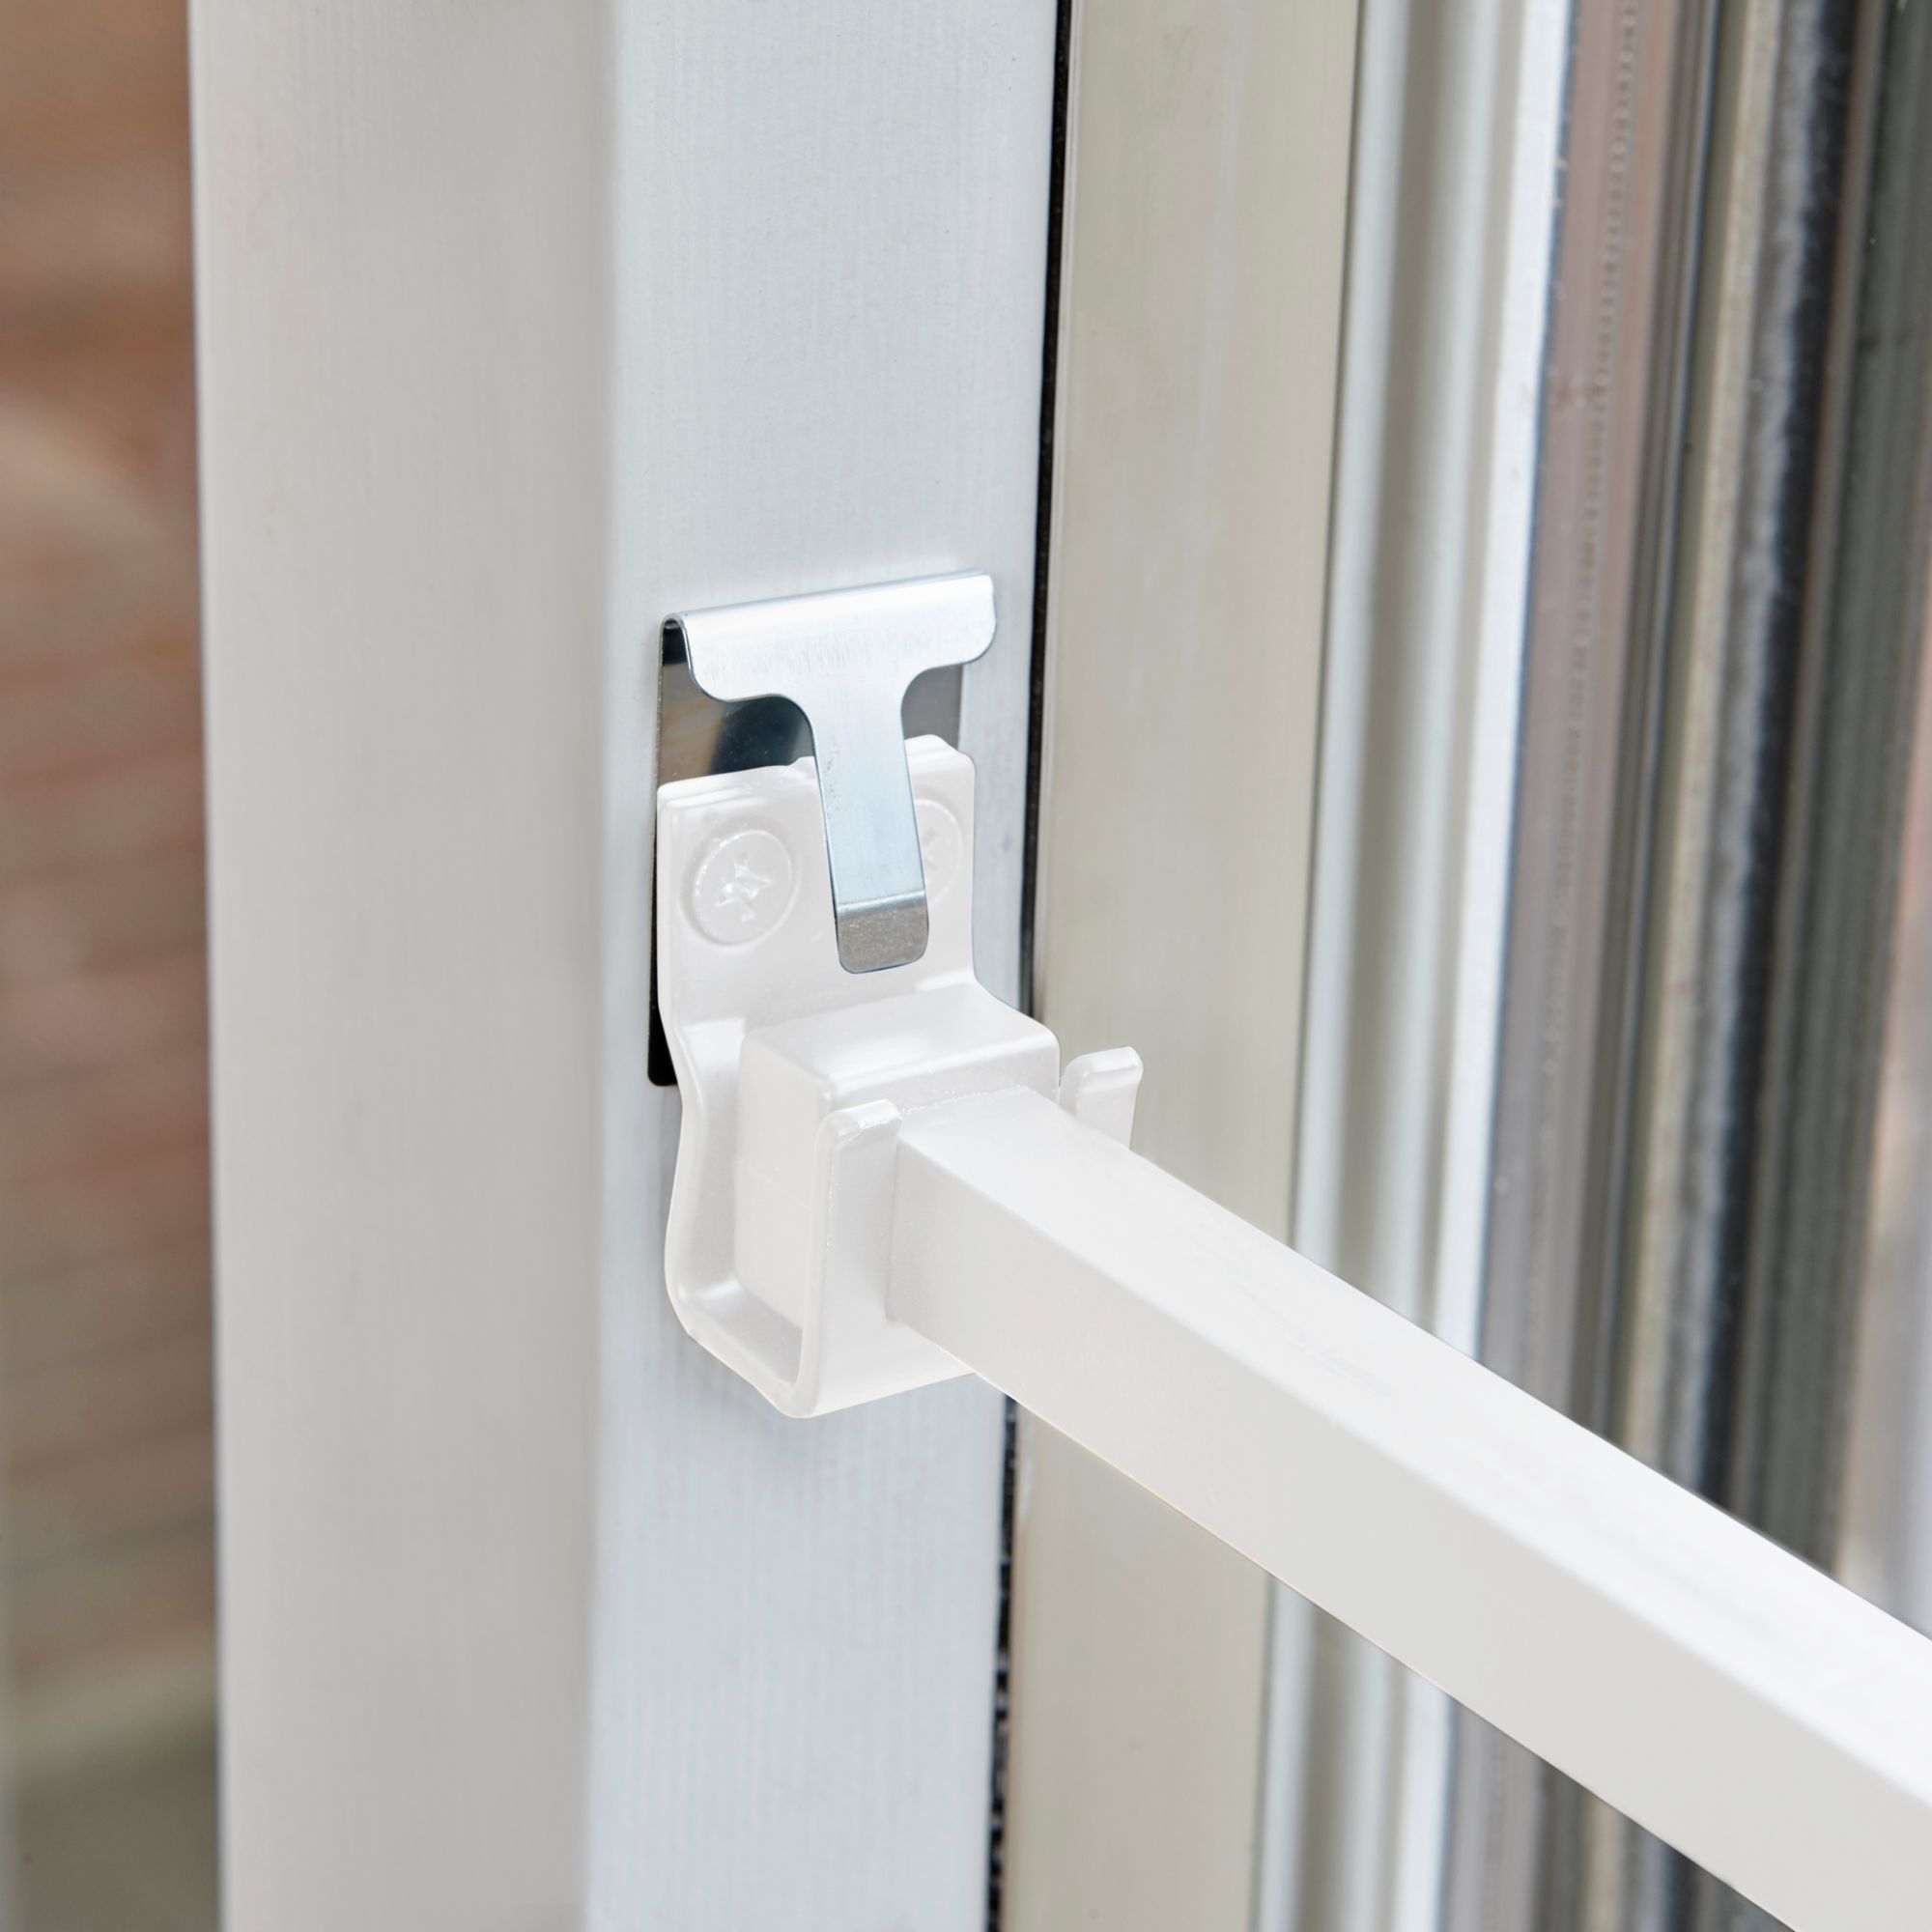 Patio Door Security Bar & Window Security Bar With Anti-Lift Lock (Bundle)